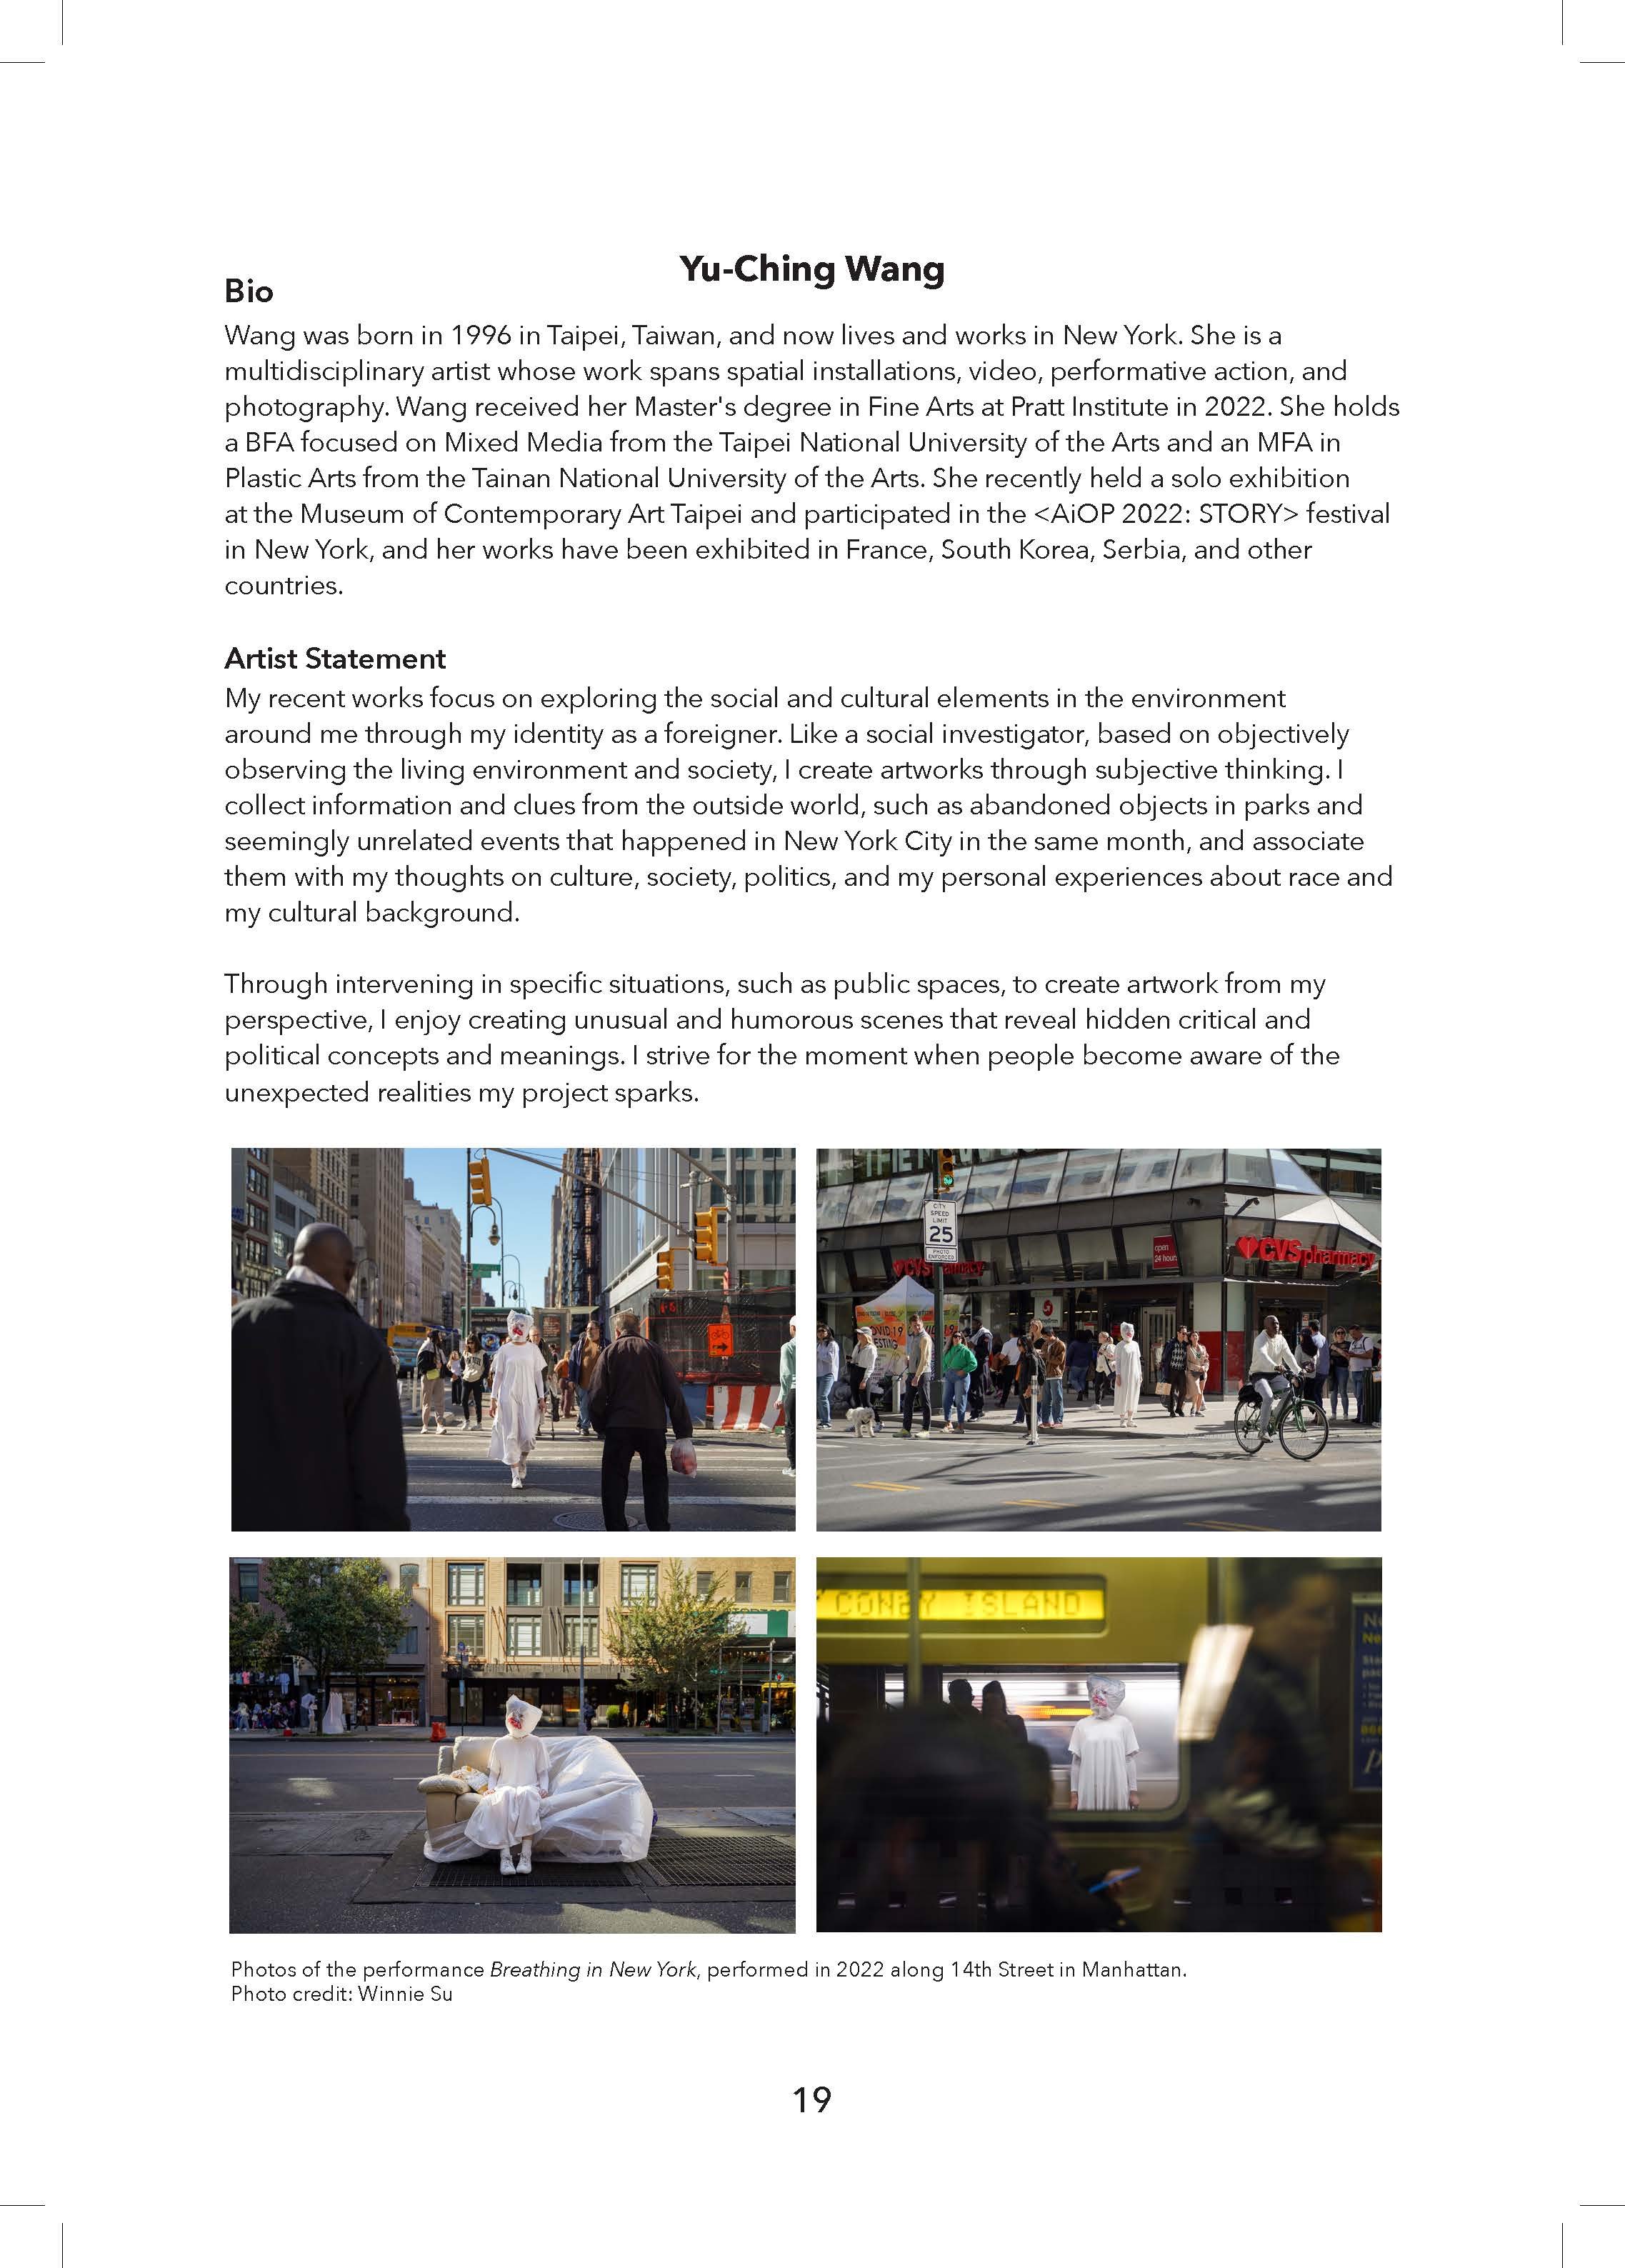 Booklet from Printer-NYC Art Bridge Wellness Through Art_Page_19.jpg